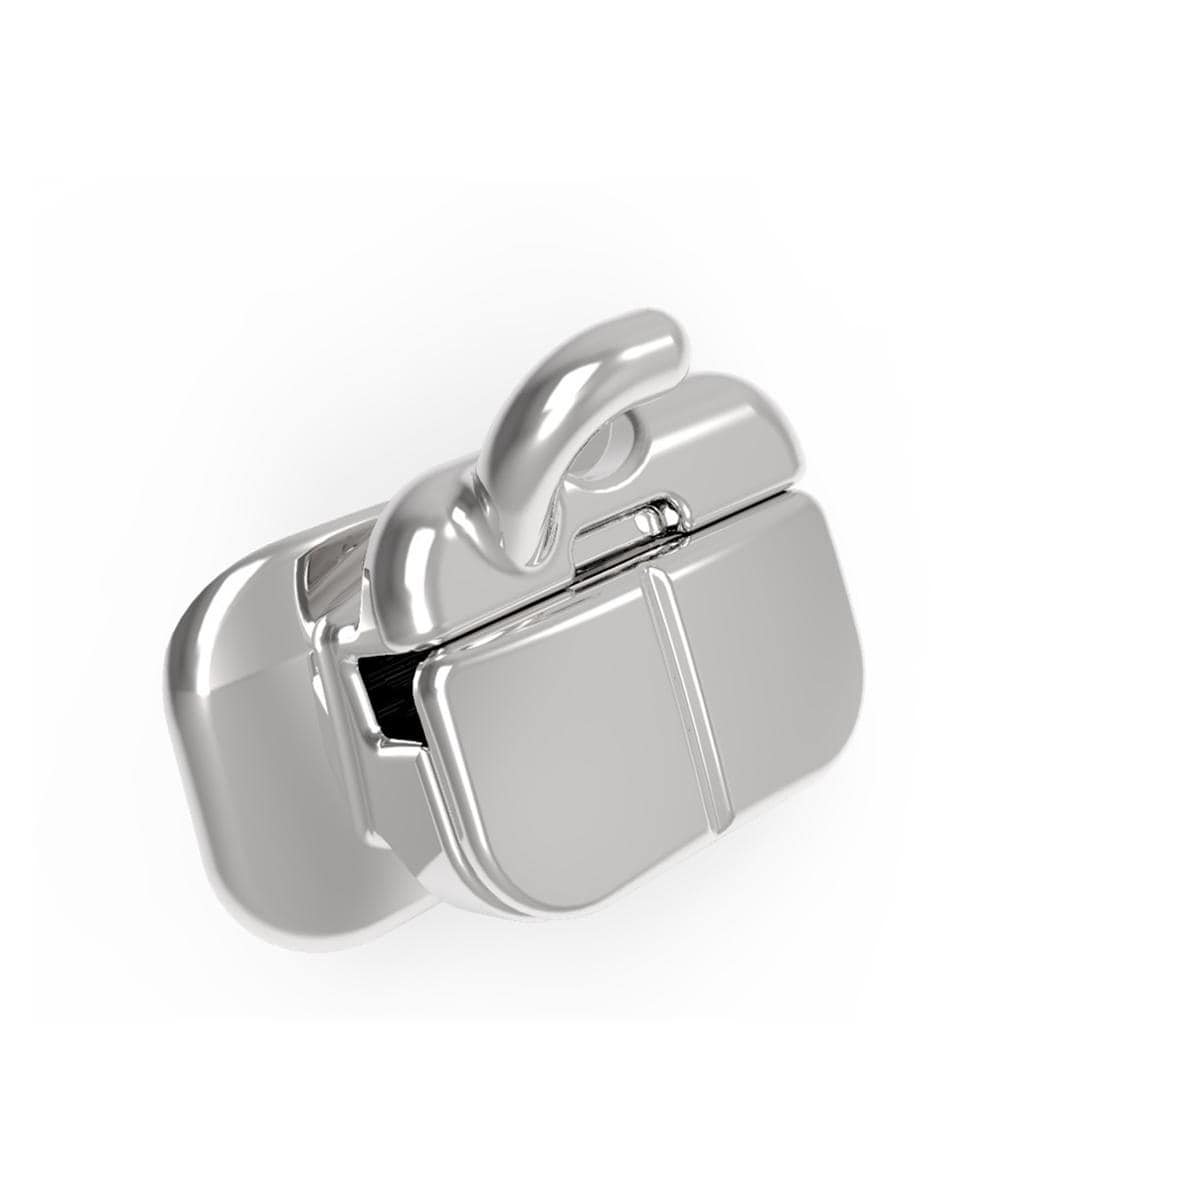 CARRIERE SLX 3D Metal Self Ligating Bracket .022 - UR6 HK (977-UR6-HK-10), 10 stuks